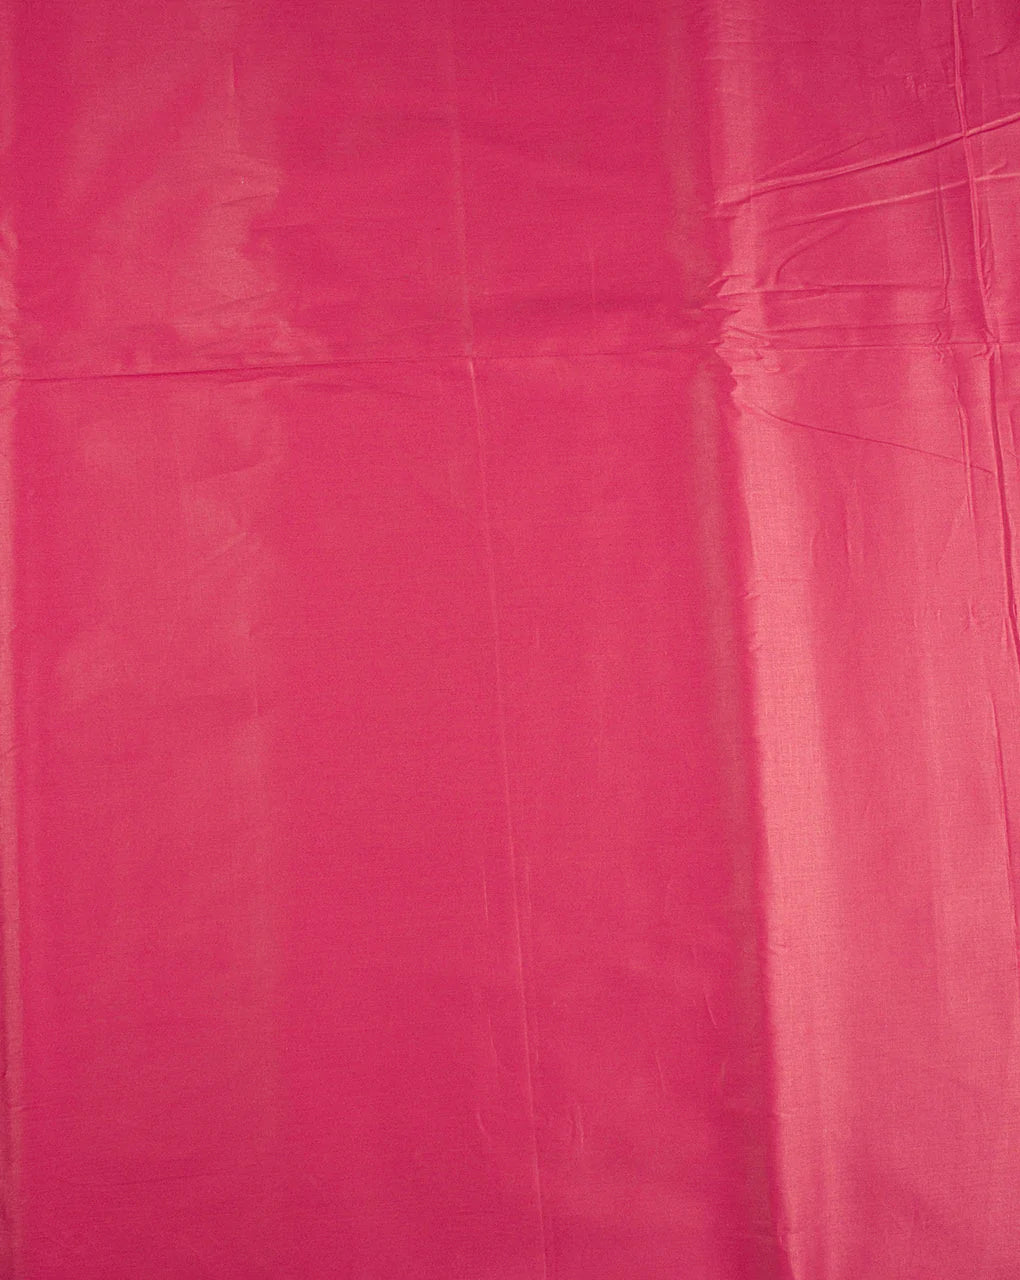 Pink Plain Glazed Cotton Fabric - Fabriclore.com